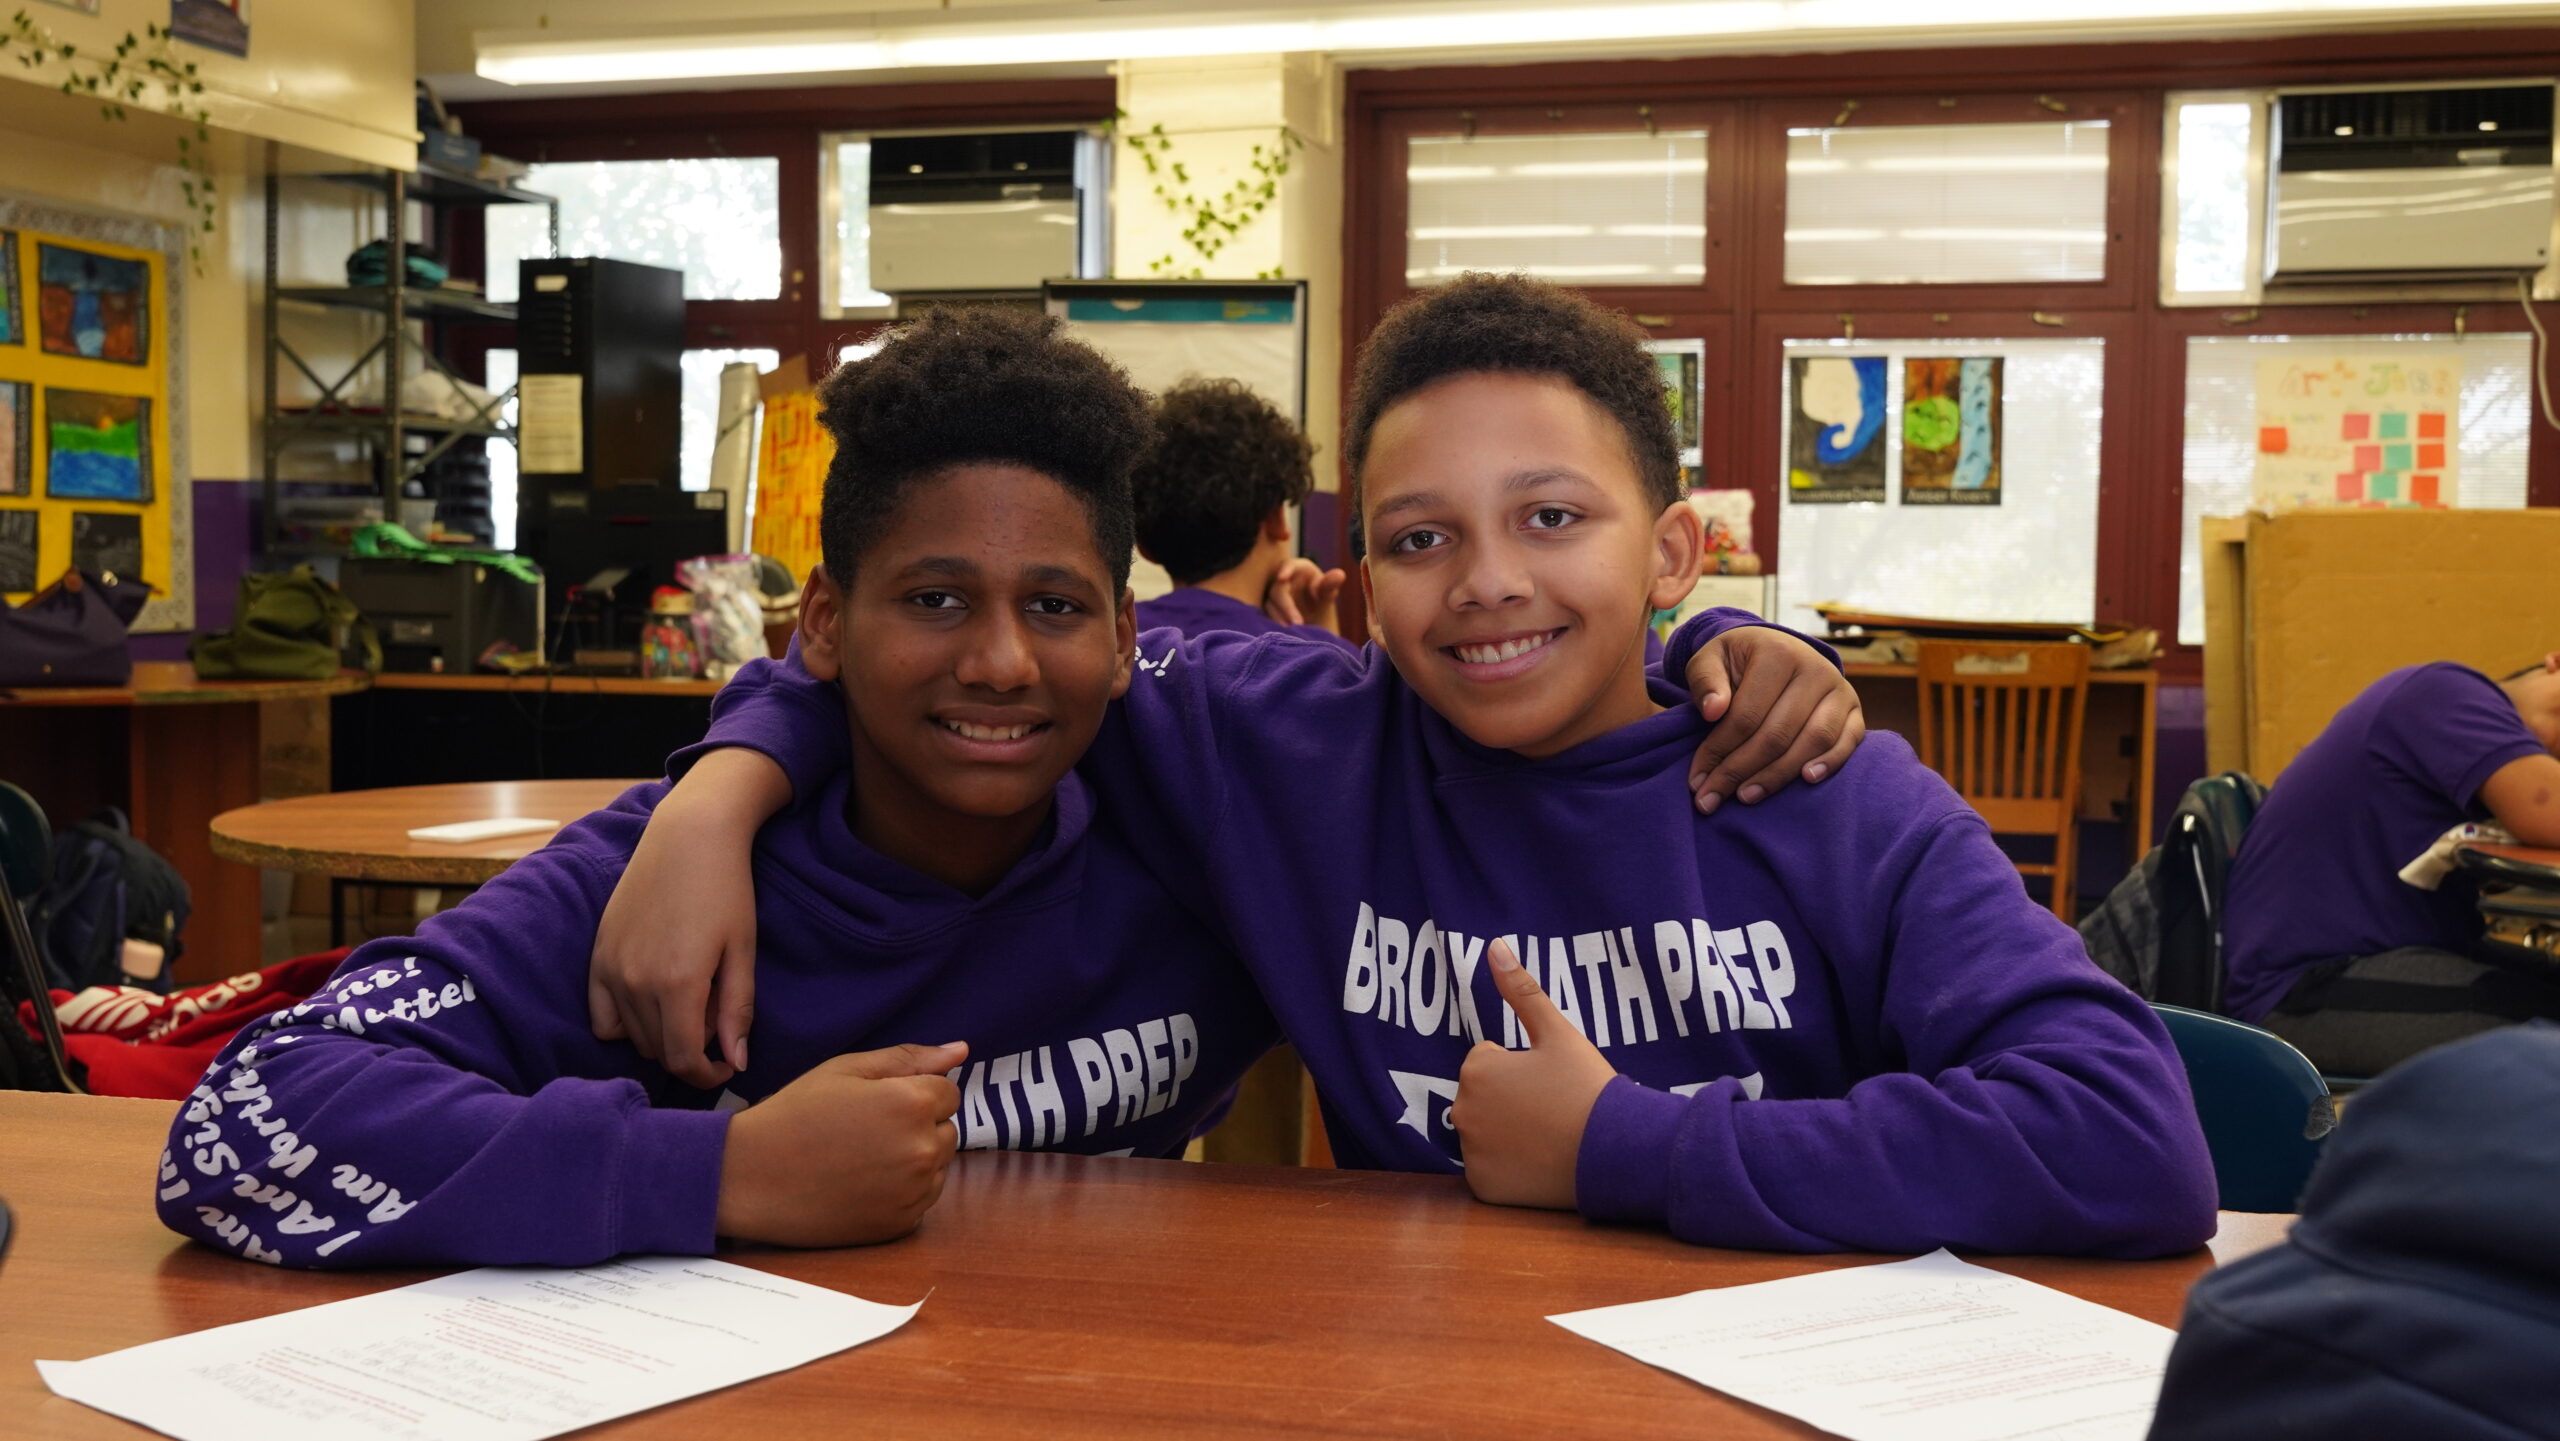 New York Edge students at Bronx Math Prep smiling